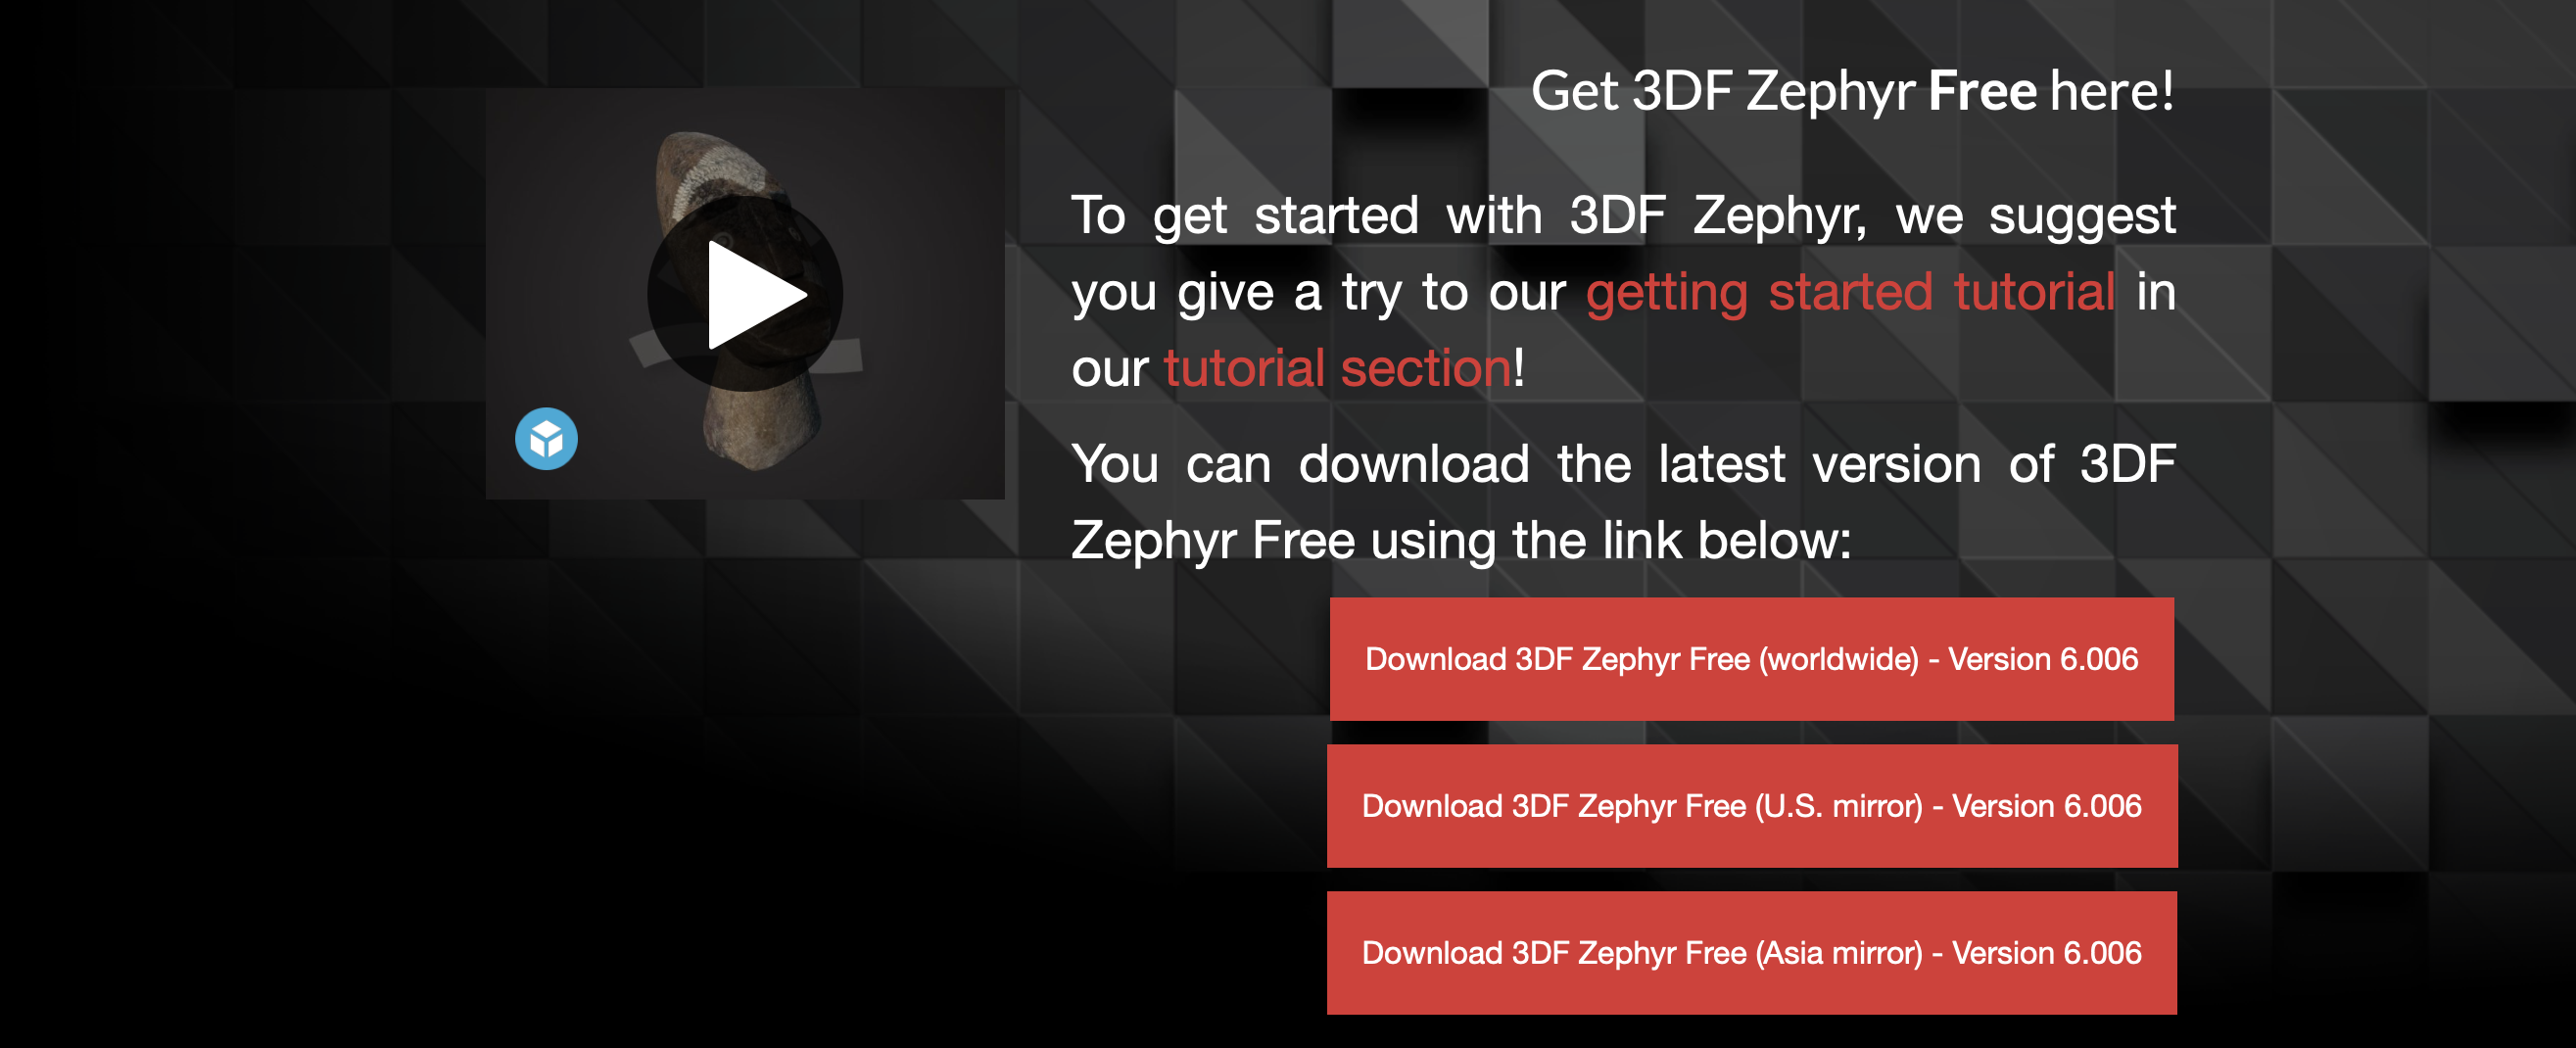 3DF zephyr